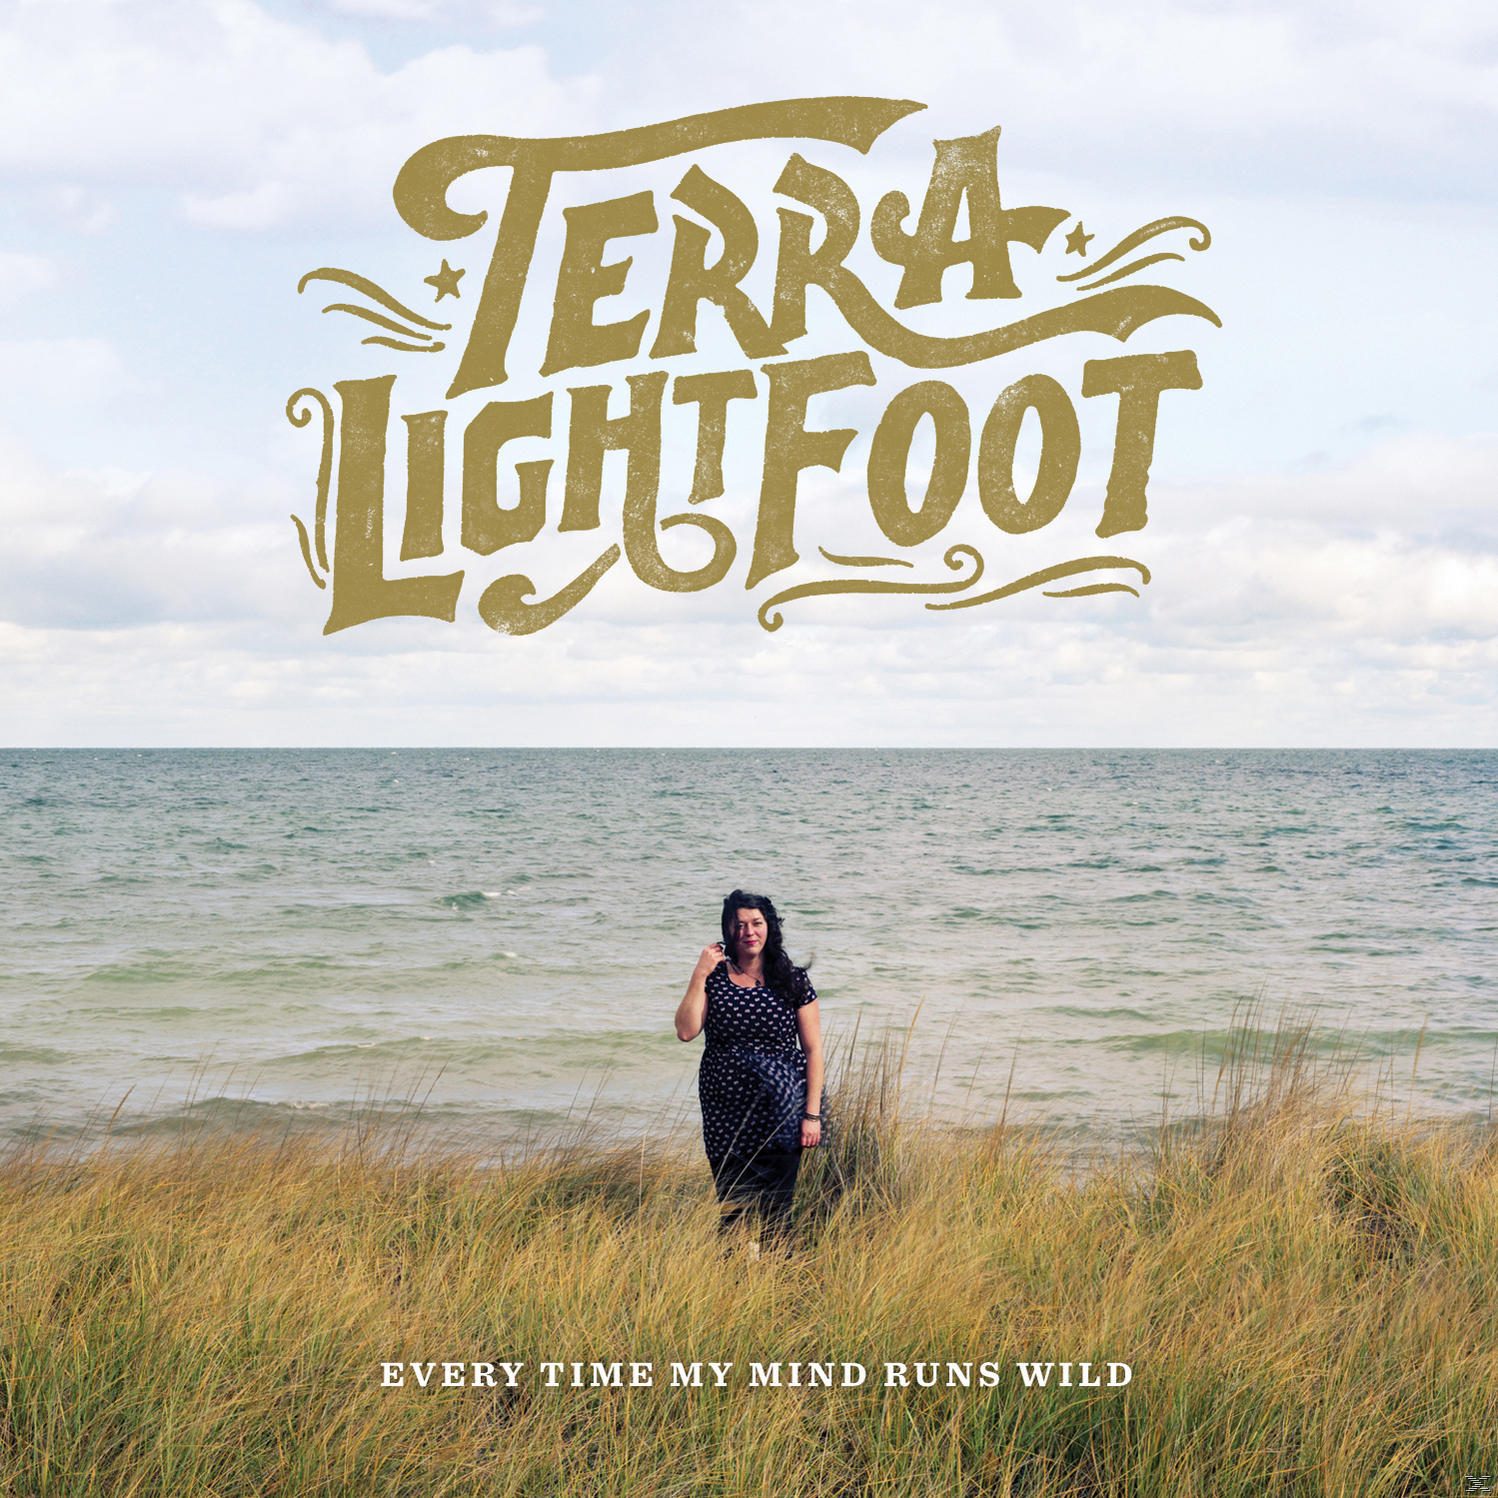 Terra My - Lightfoot Every Wild Time Runs Mind (CD) -